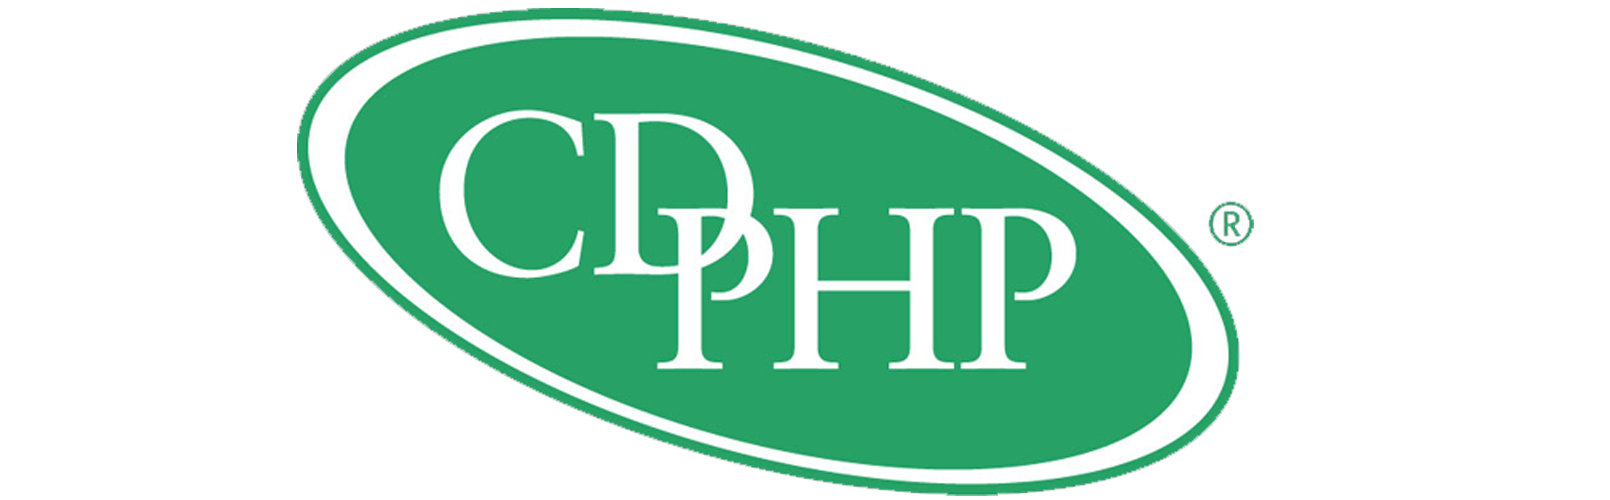 CDPHP-Insurance